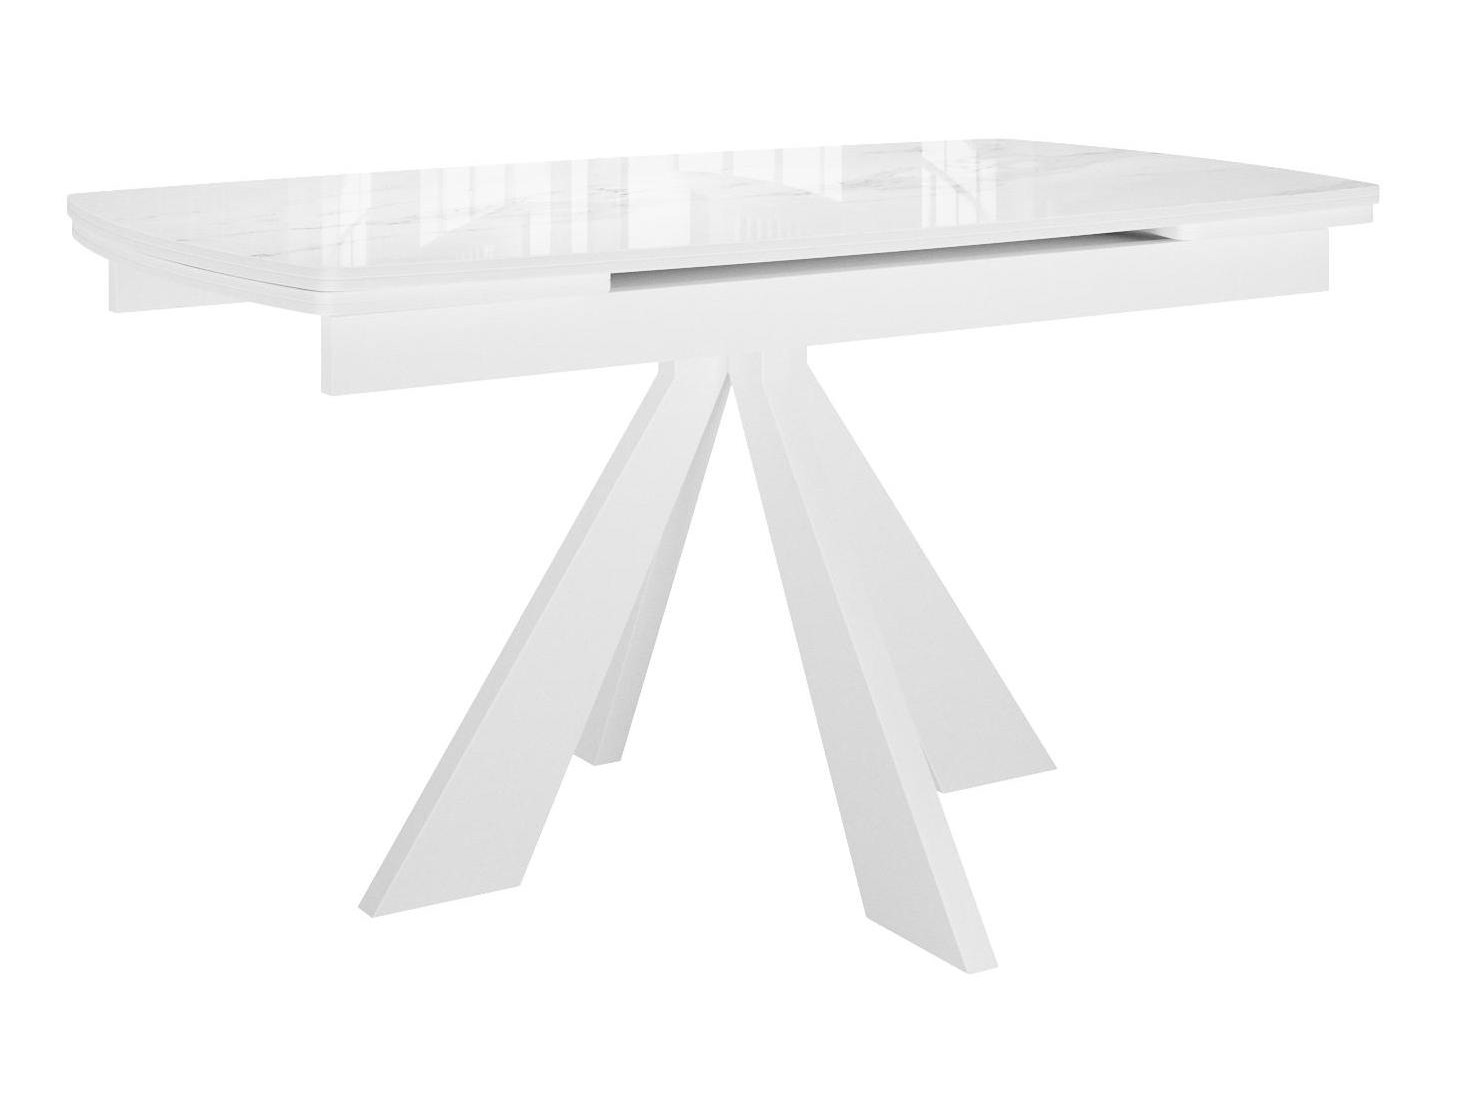 Стол DikLine SFU140 стекло белое мрамор глянец/подстолье белое/опоры белые (2 уп.) Белый, Стекло стол обеденный kenner 900с венге стекло белое глянец cтекло белое стекло